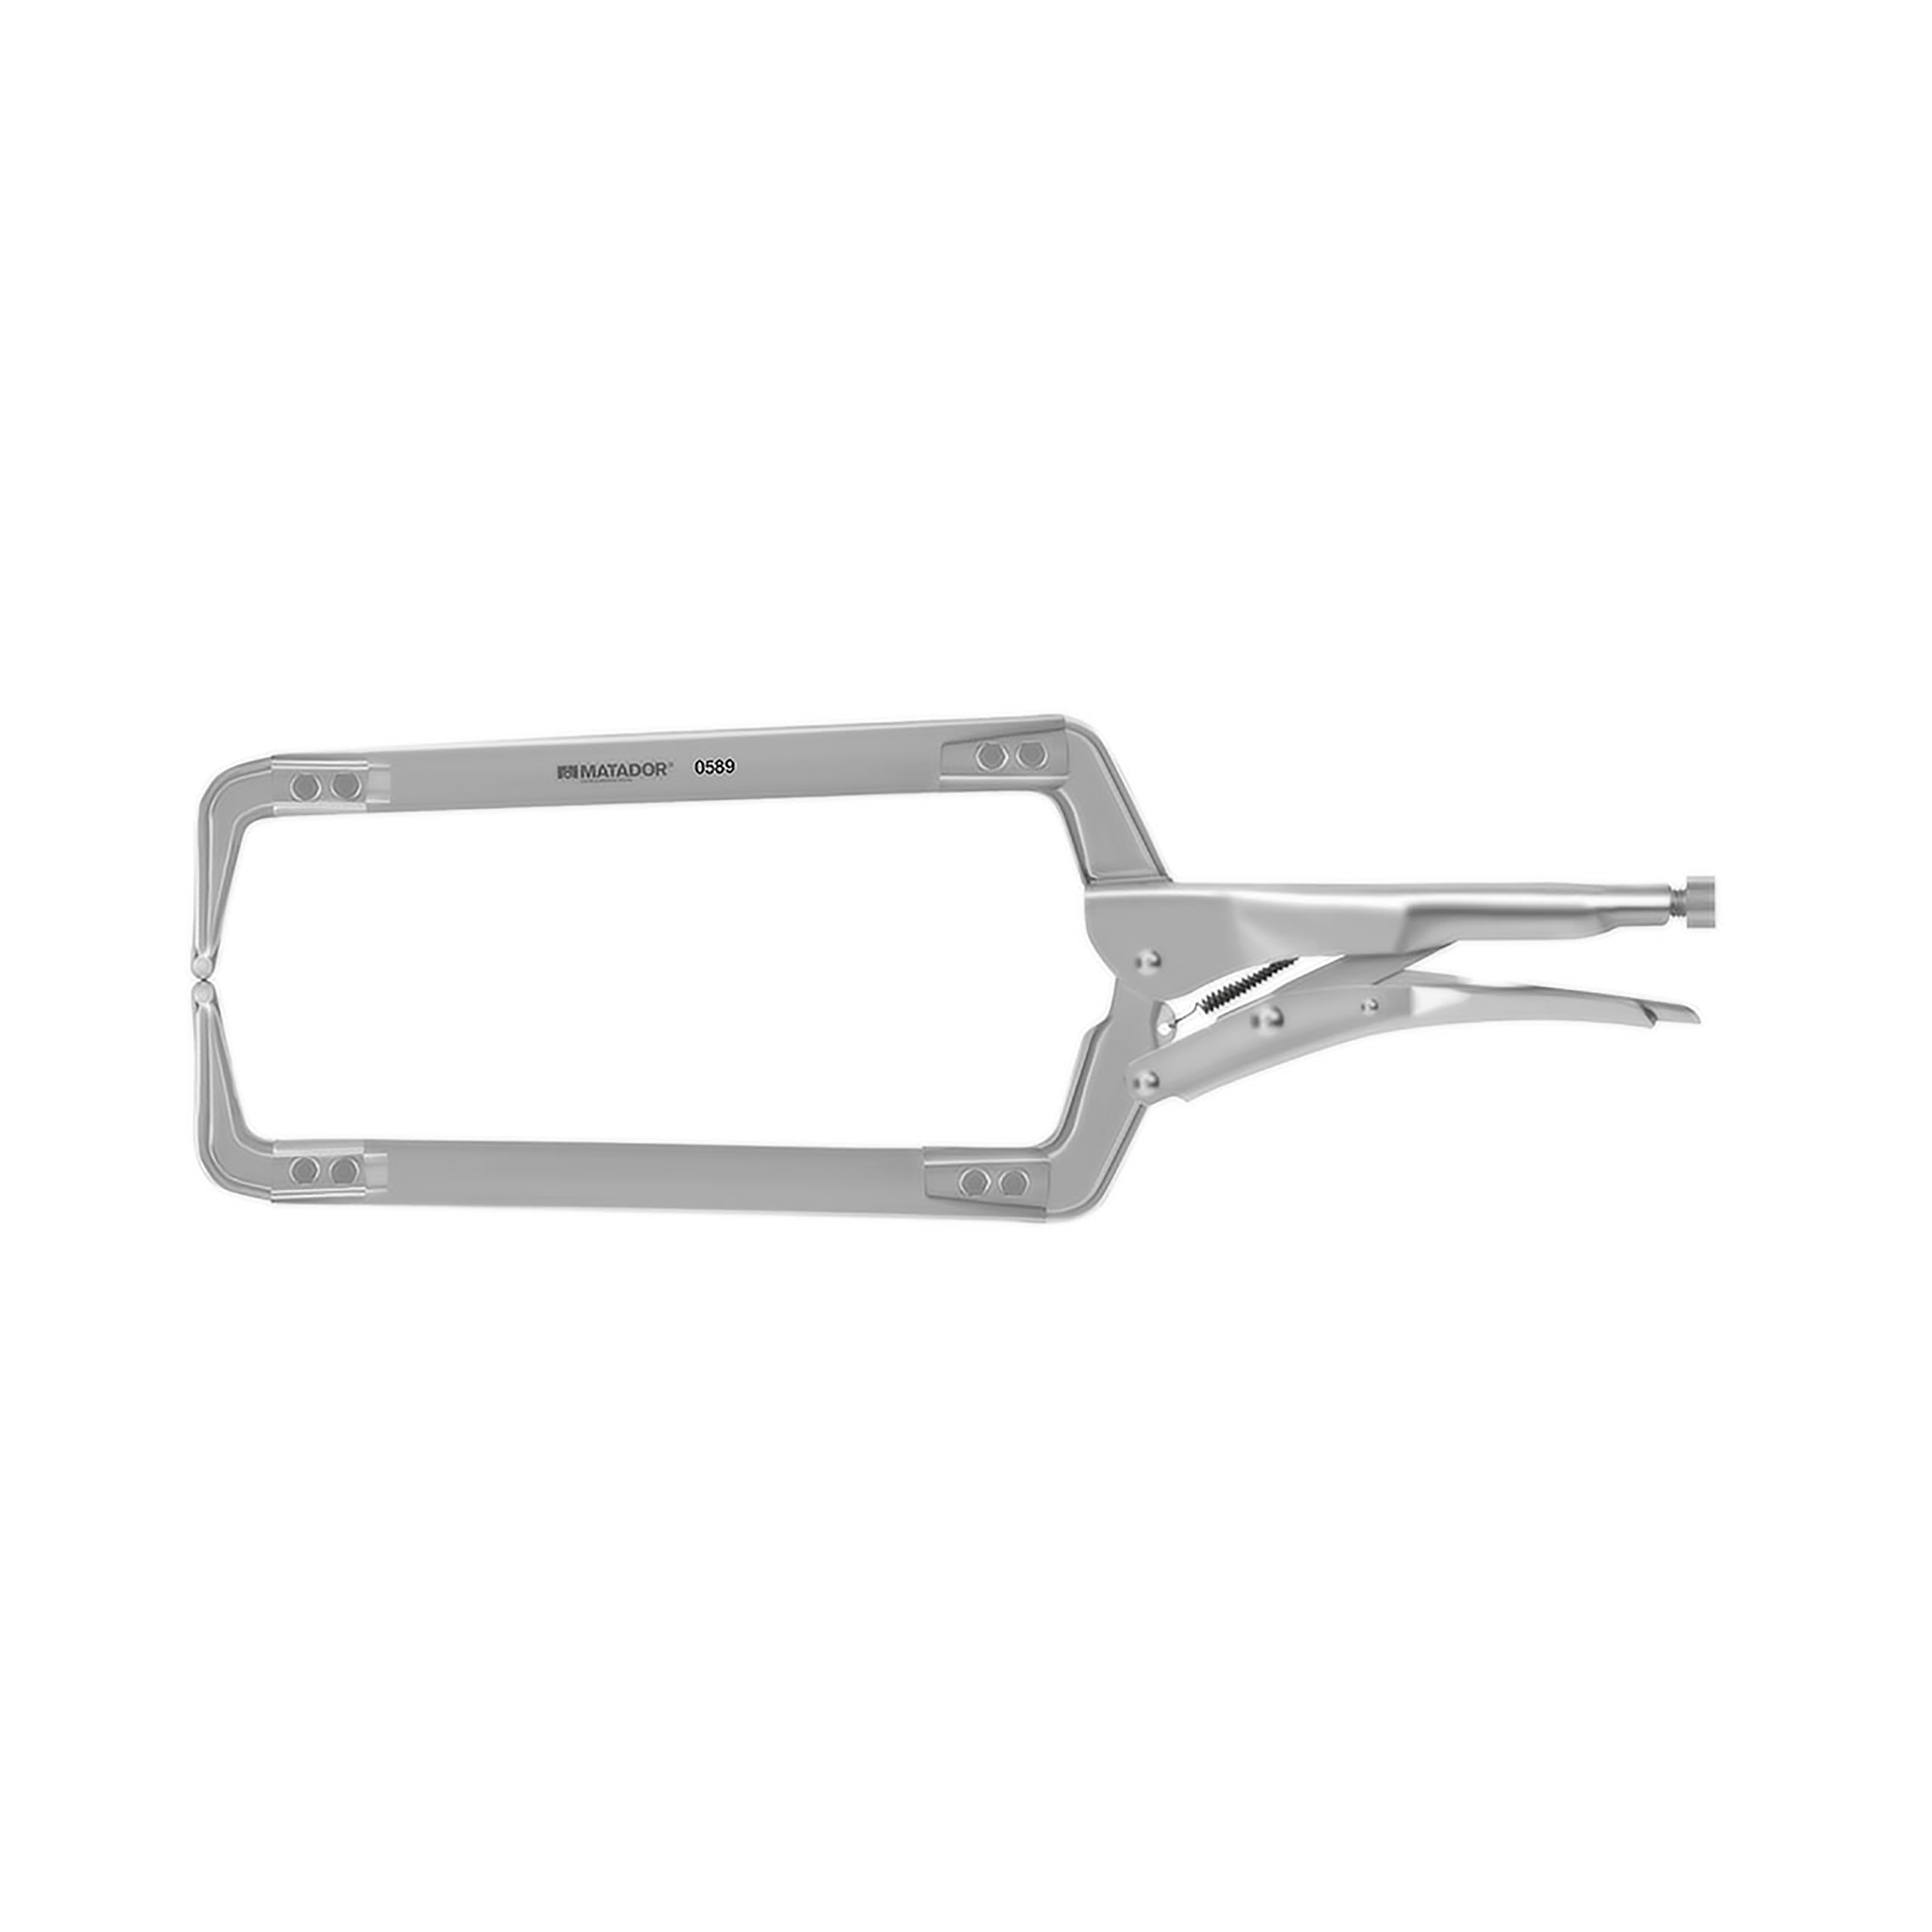 Clamp grip pliers, 280 mm (11"), MATADOR item no.: 05890280